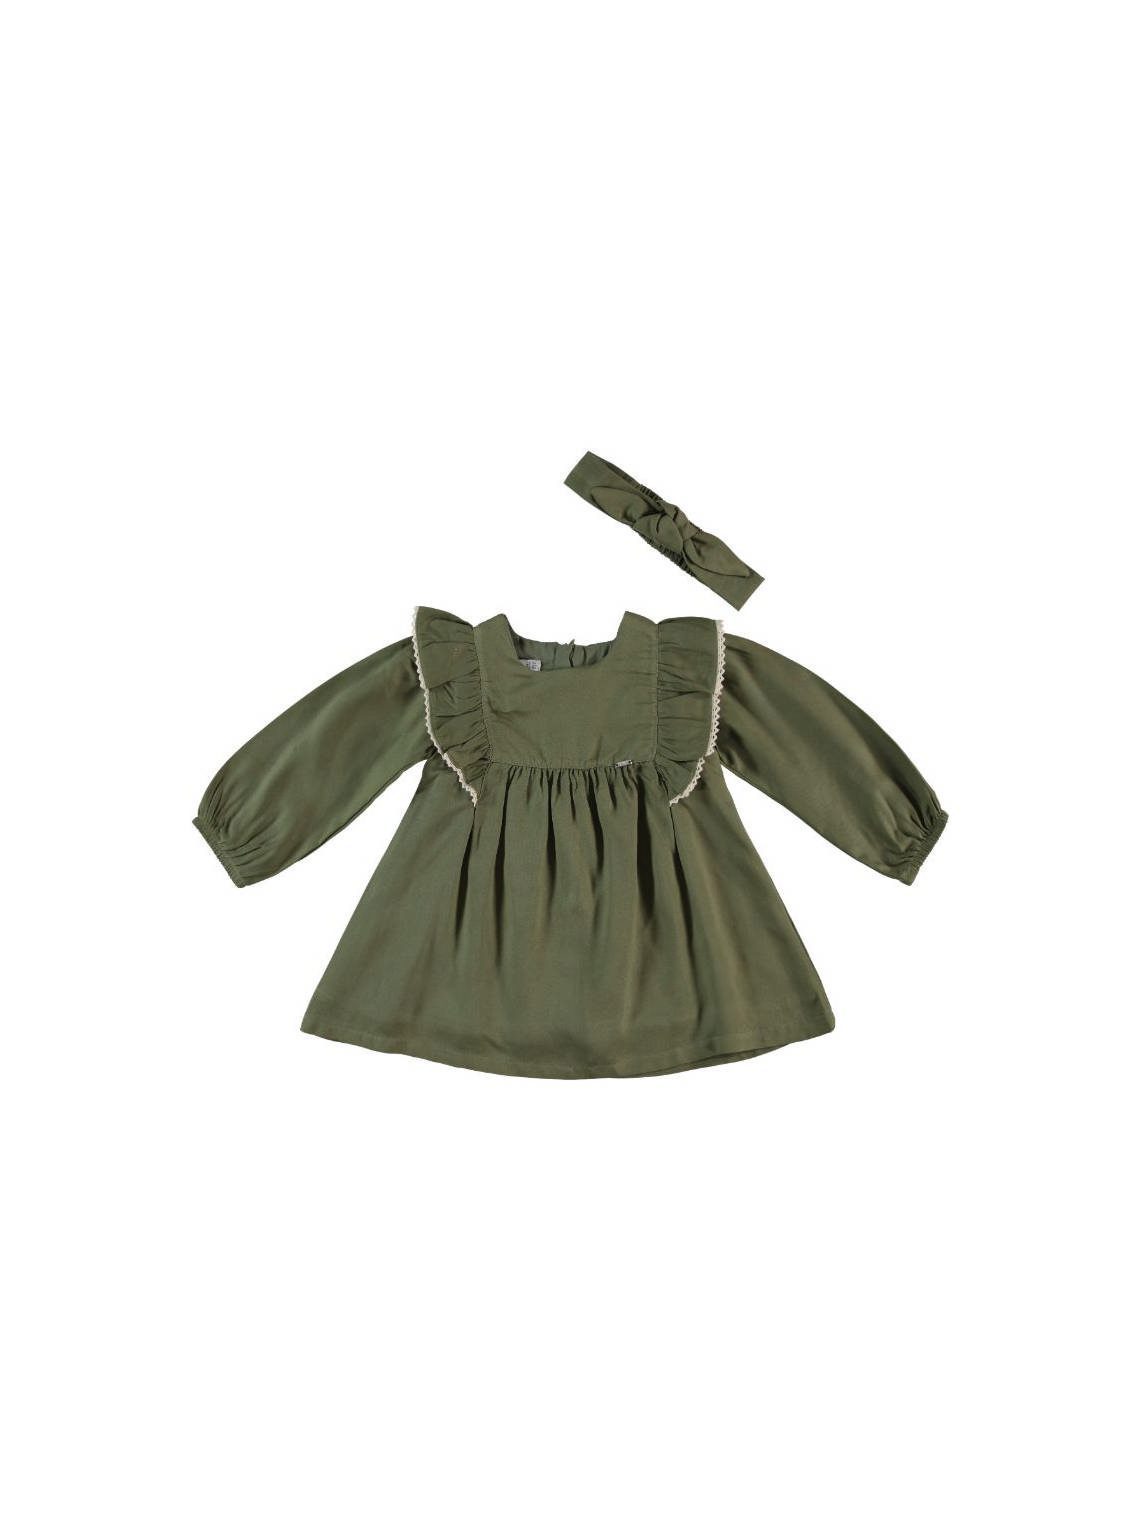 Exclusive Brand - Baby Girl 2 Pieces Dress Set ( Dress + Bandana ) 9M | 12M | 18M | 24M - Kids Fashion Turkey